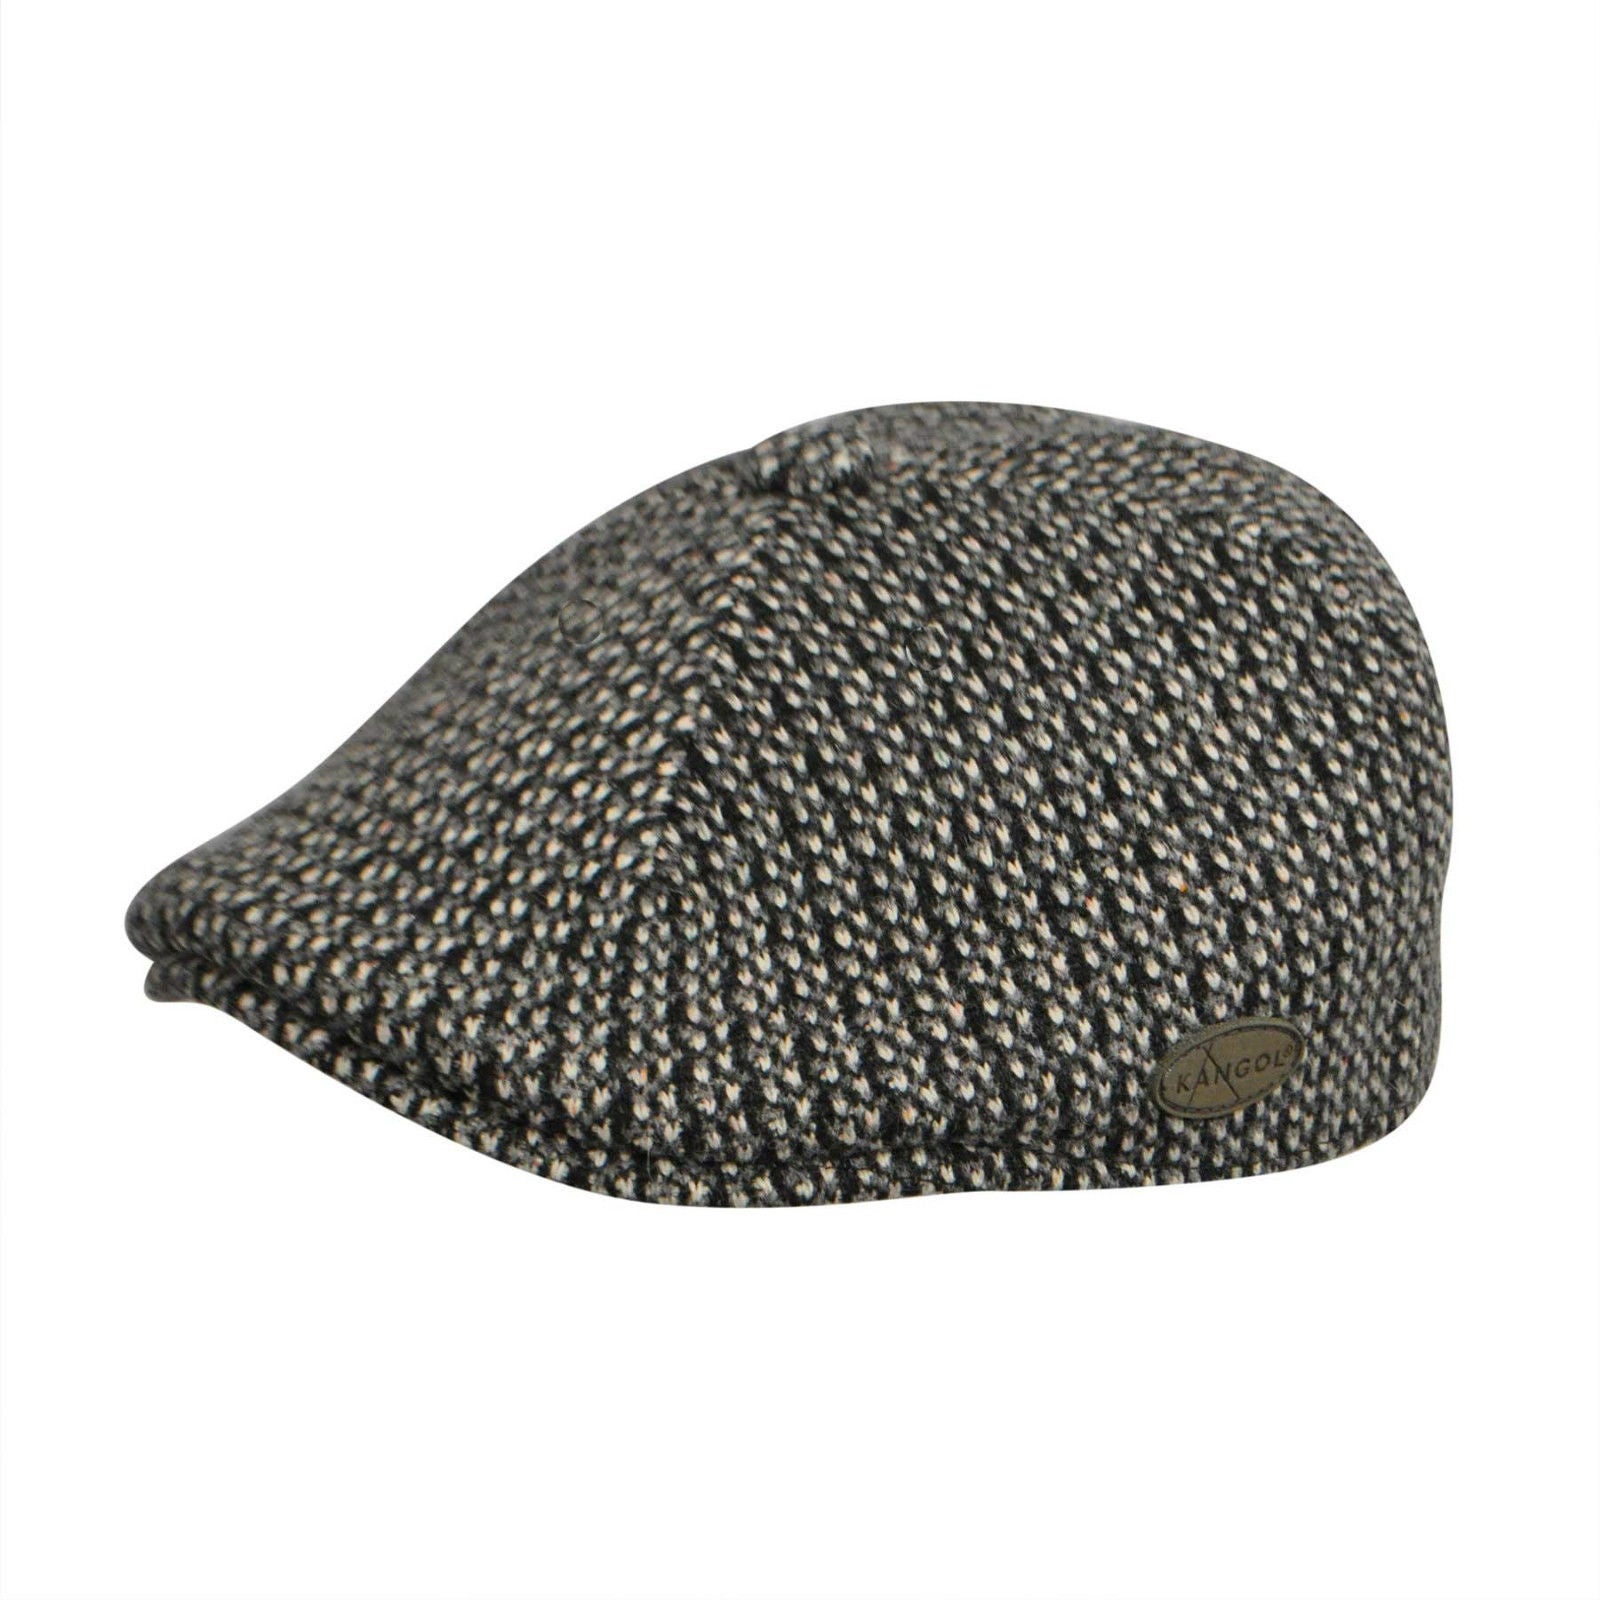 KANGOL Houndstooth 507 Ivy Cap Wool Blend Hat K1543CO Winter Warm